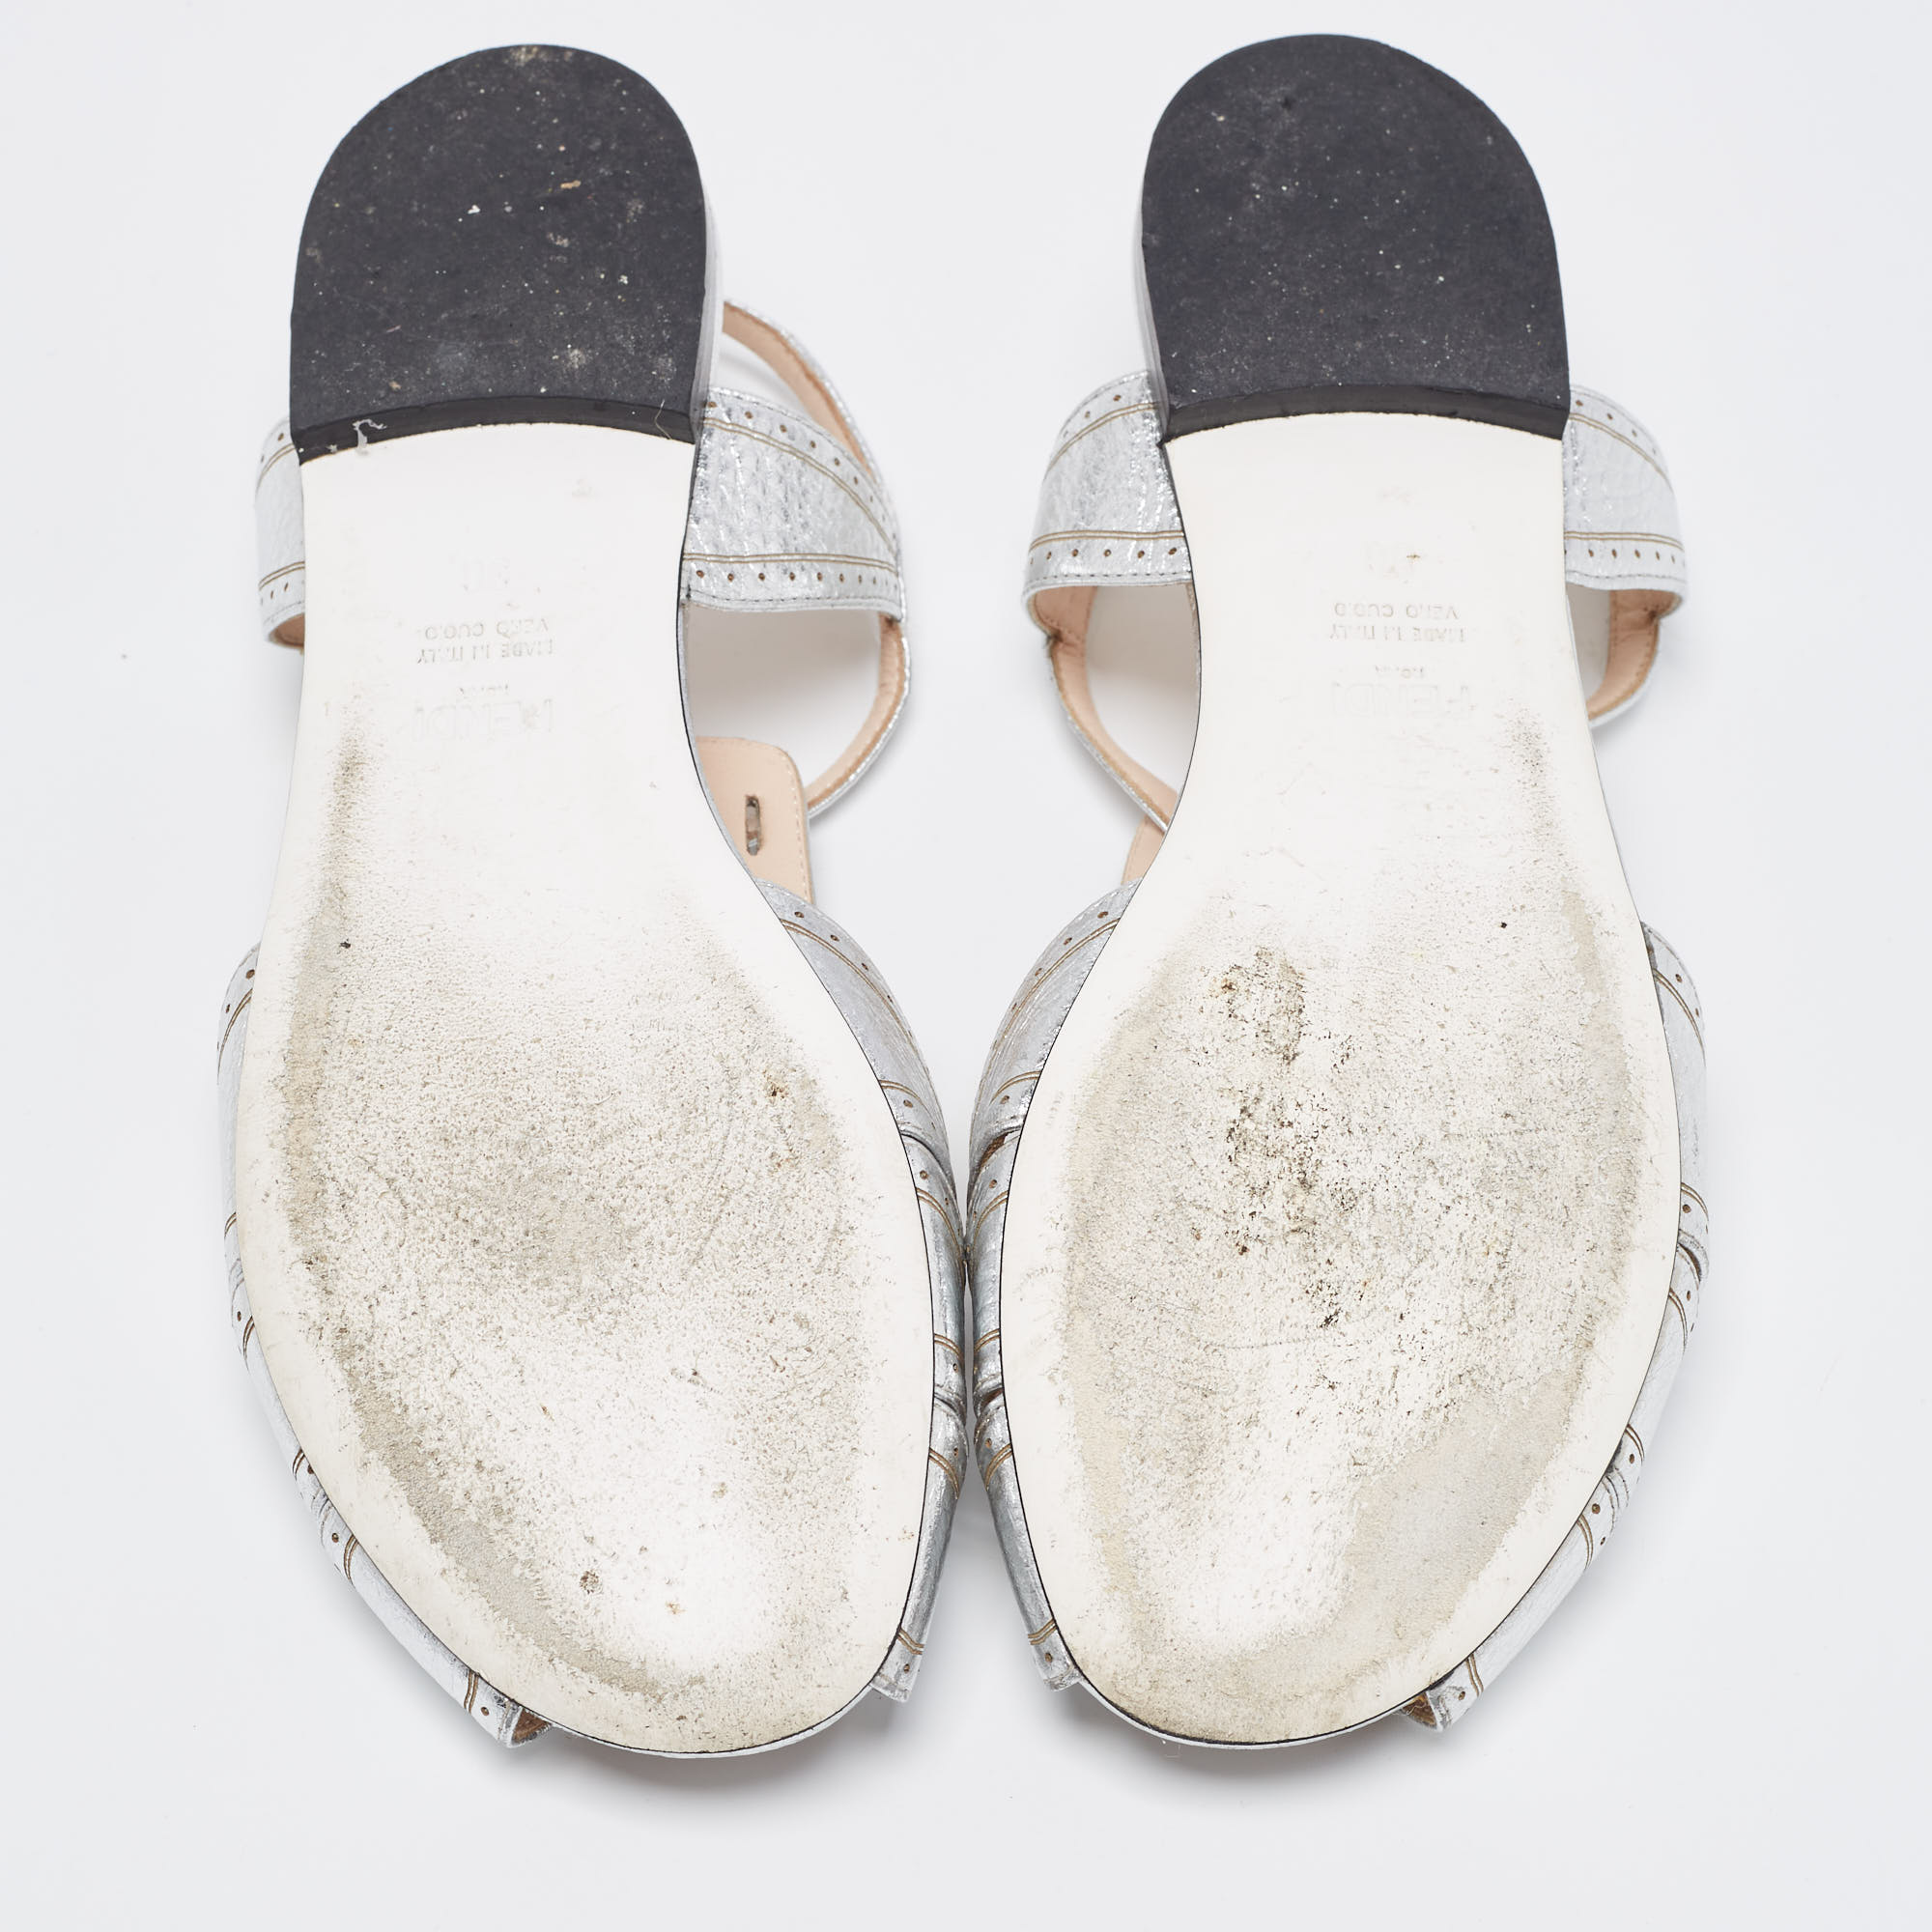 Fendi Metallic Silver Foil Leather Chameleon Ankle Strap Flat Sandals Size 36